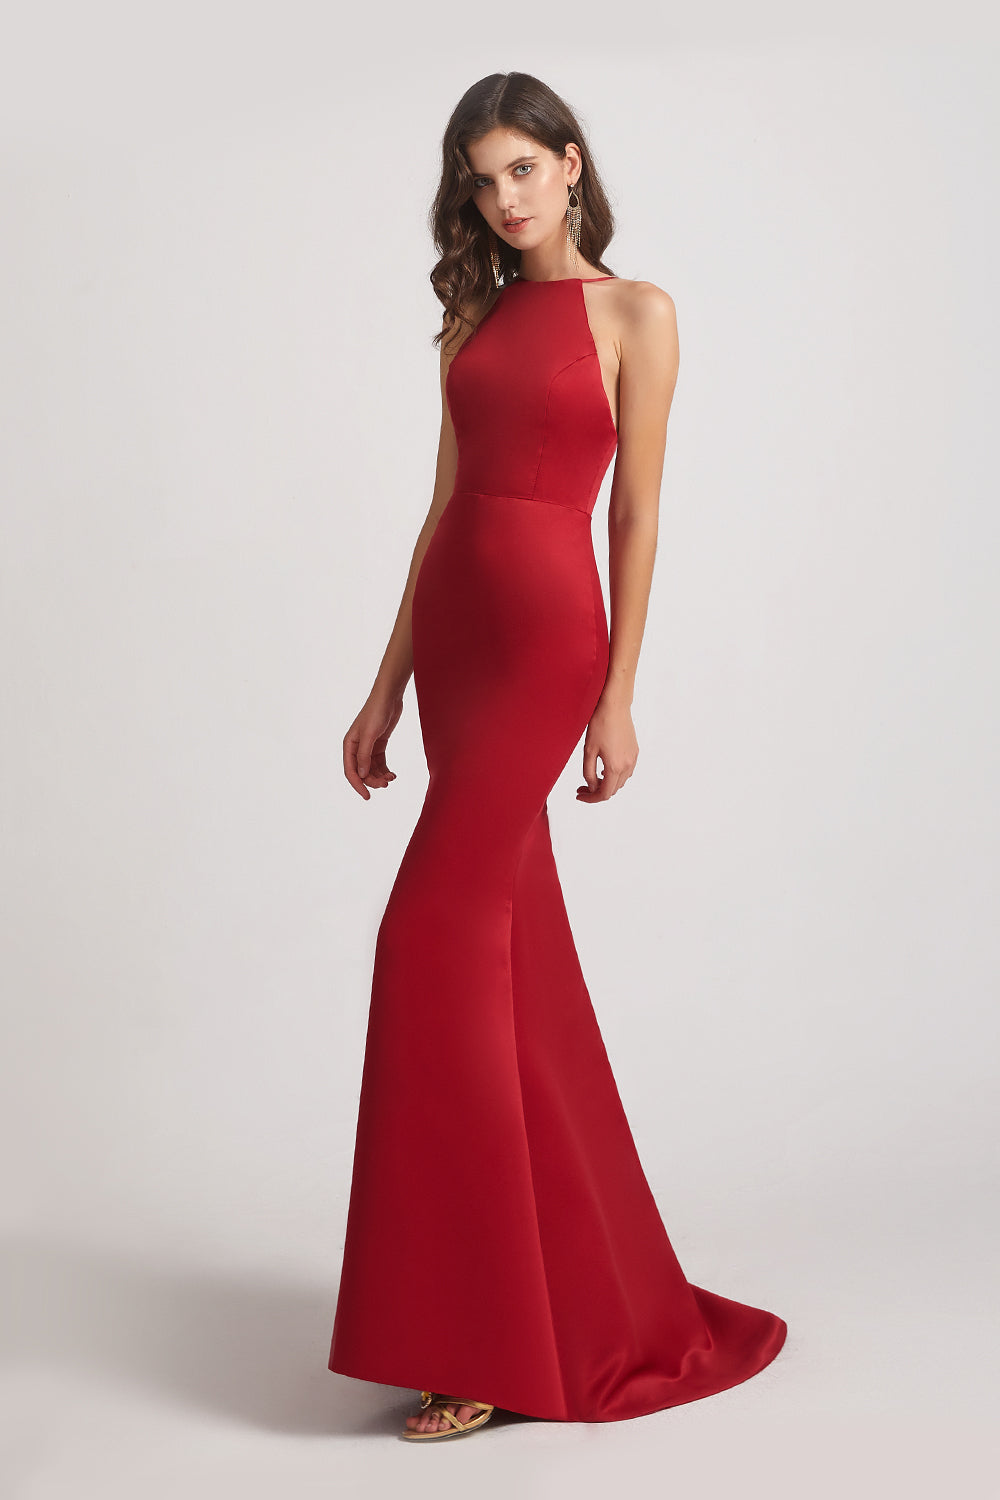 sheath red satin bridesmaids dresses